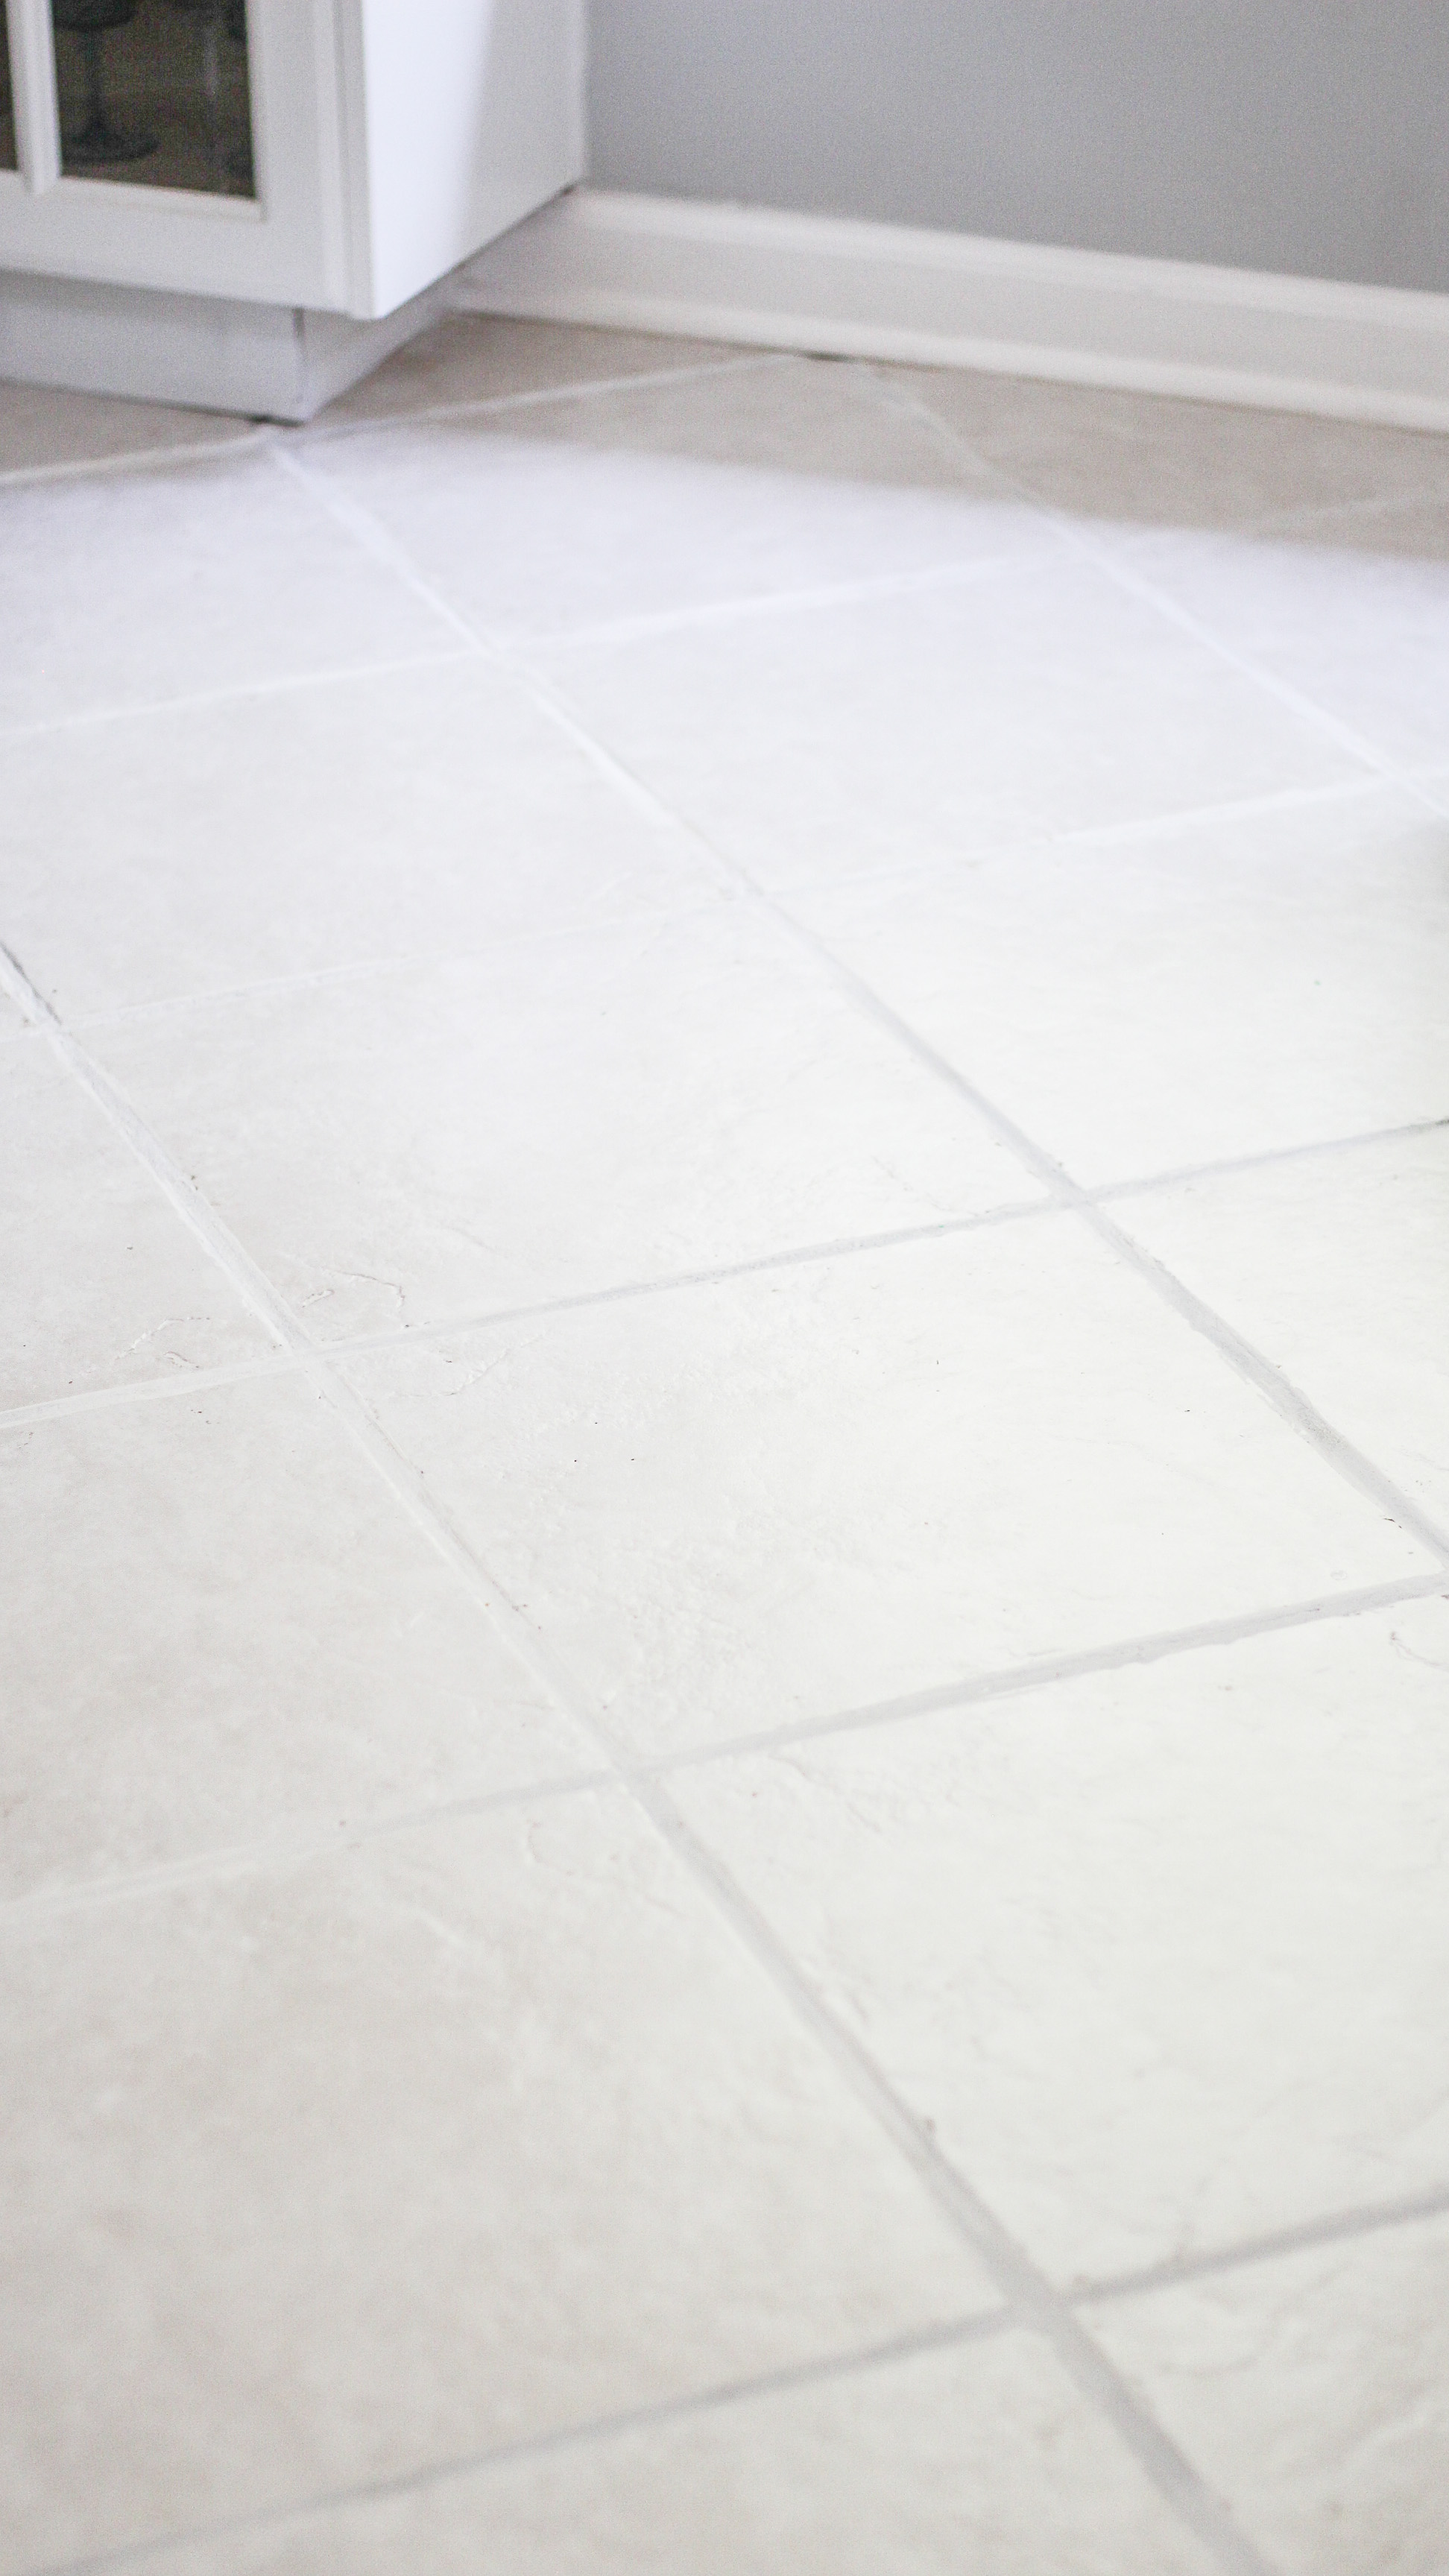 Neglected Tile Flooring, Best Way To Keep Tile Floors Clean